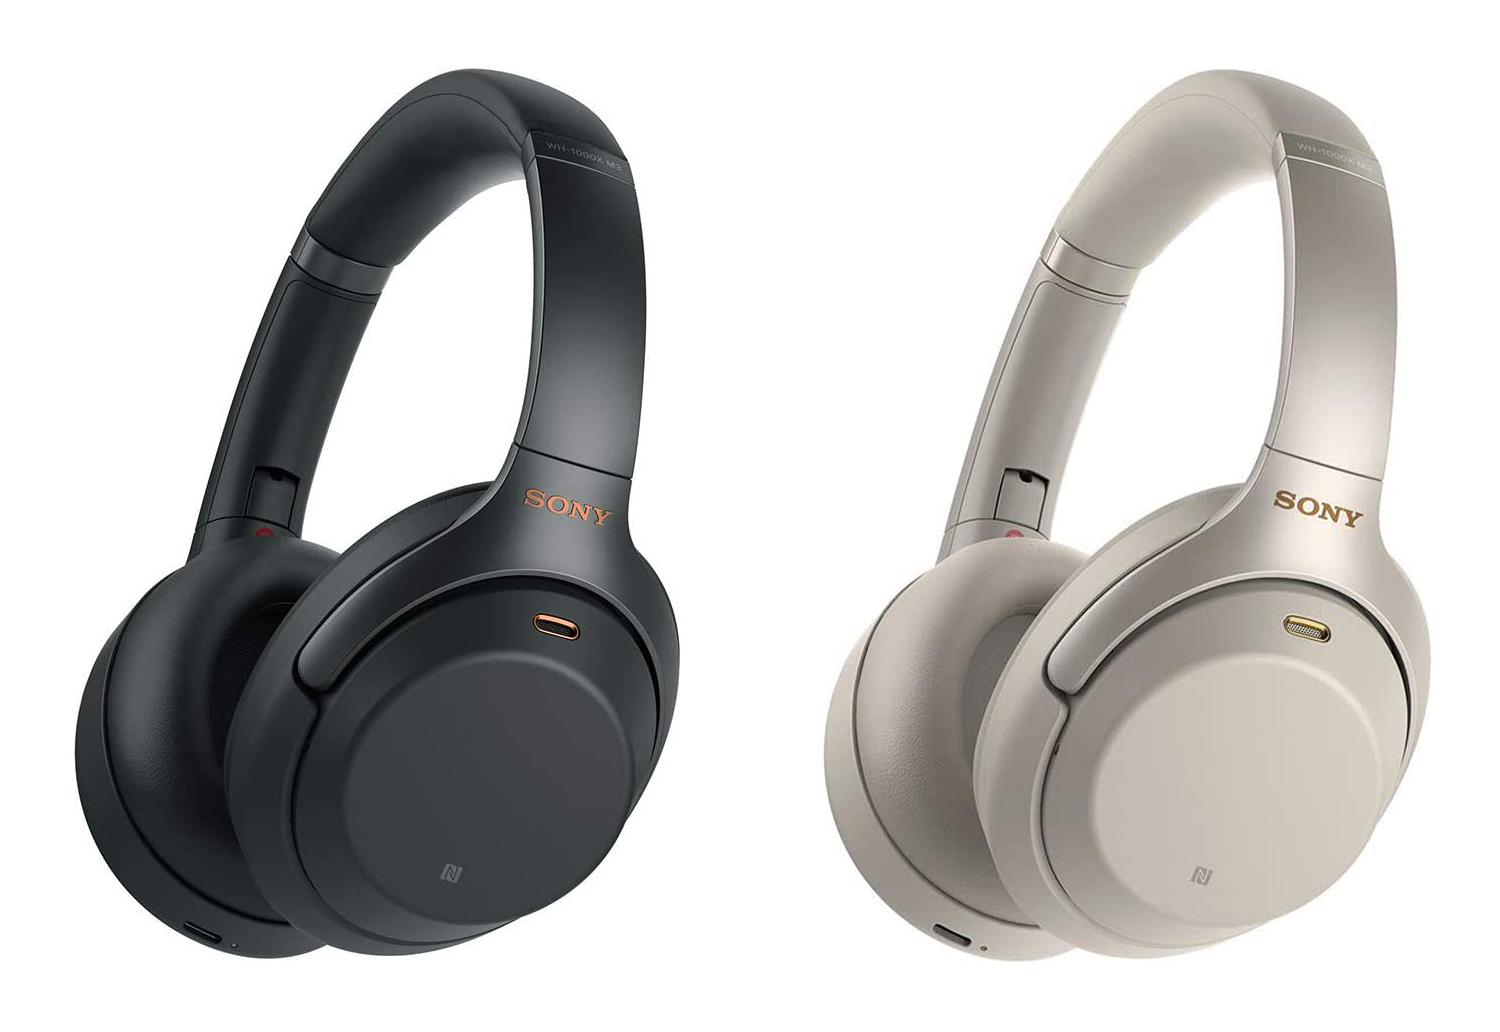 Sony WH-1000XM4 headphone leaks 2020